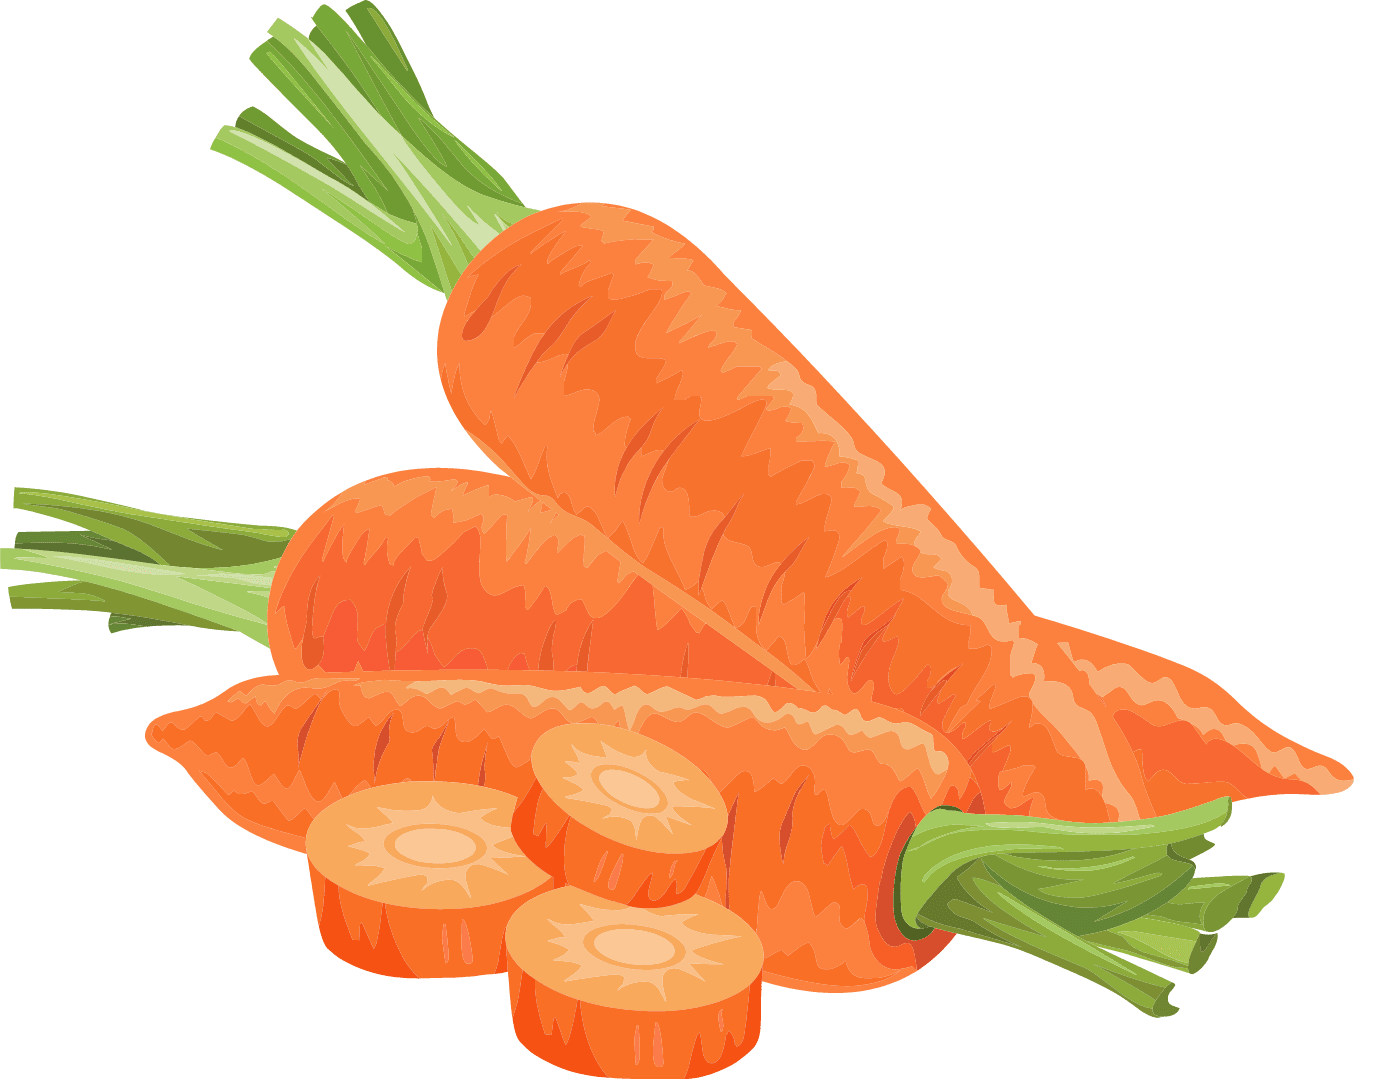 illustration of carrots